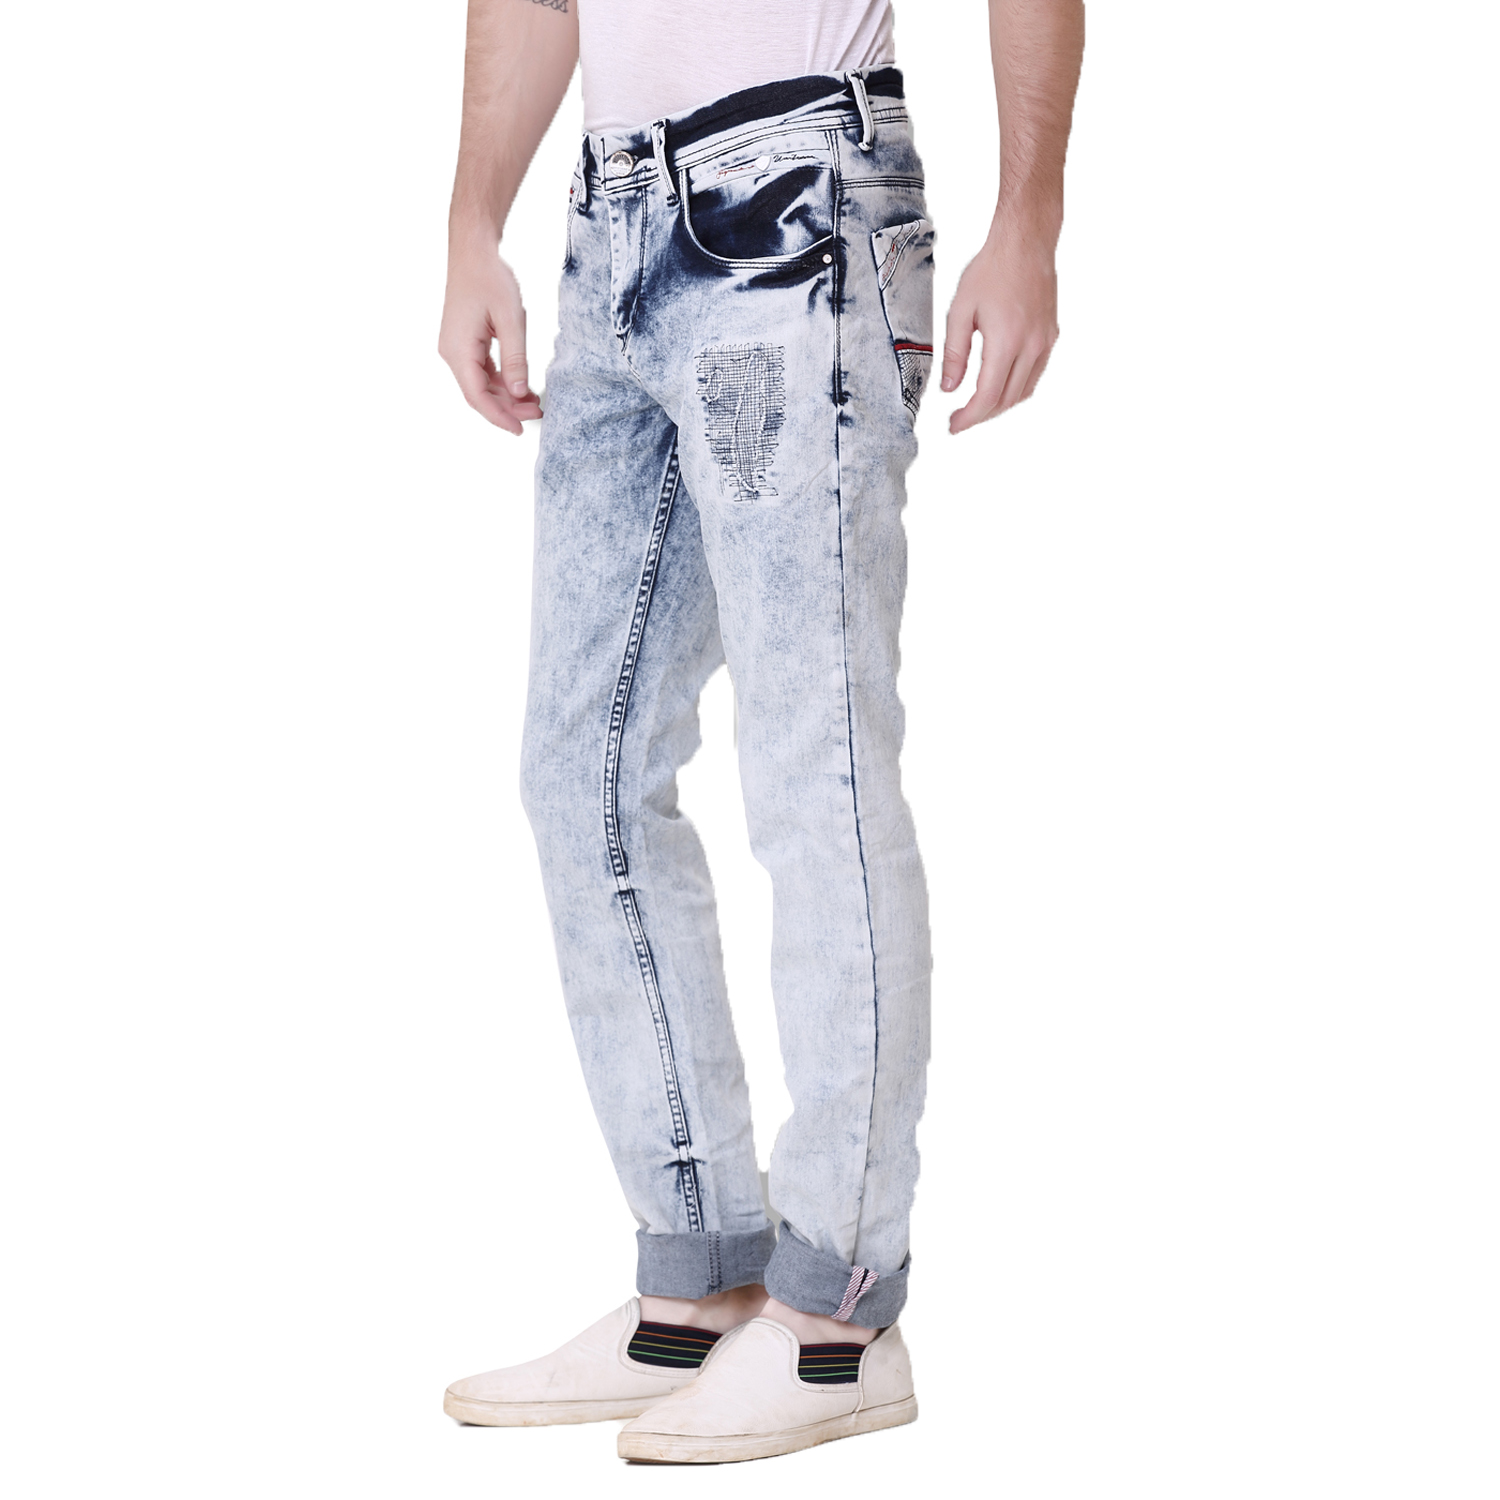 Buy Kozzak Mens Ice Blue Slim Fit Denim Jeans Online @ ₹1244 from ShopClues